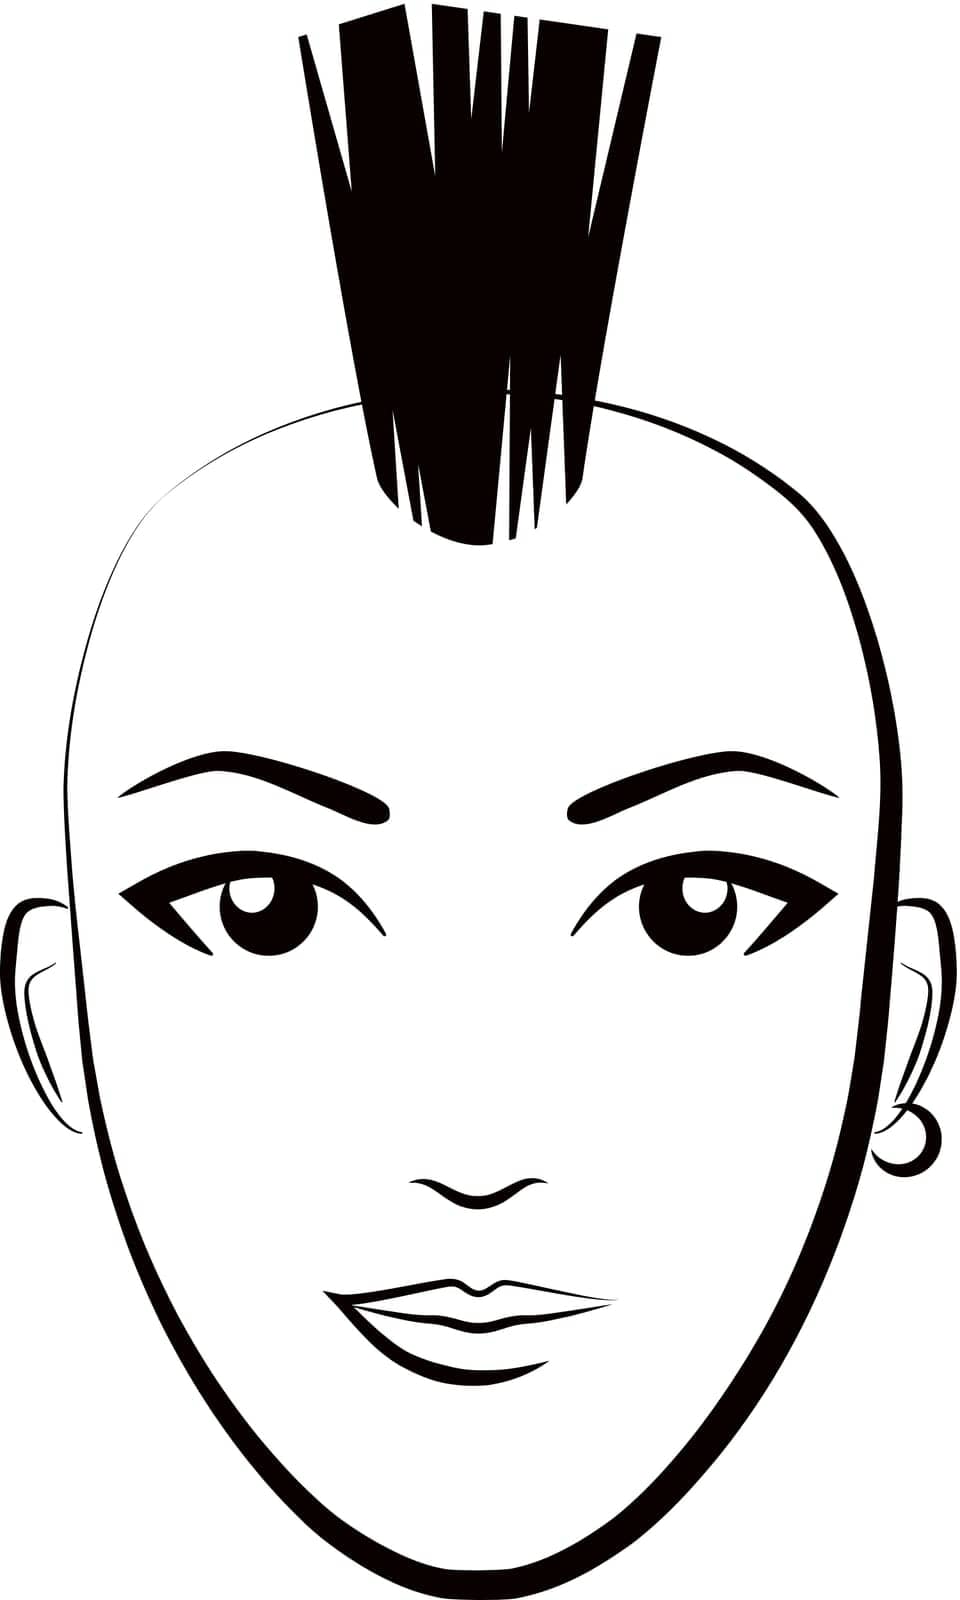 Woman head with punk hairstyle. Fashion trendy female headdress logo monochrome illustration